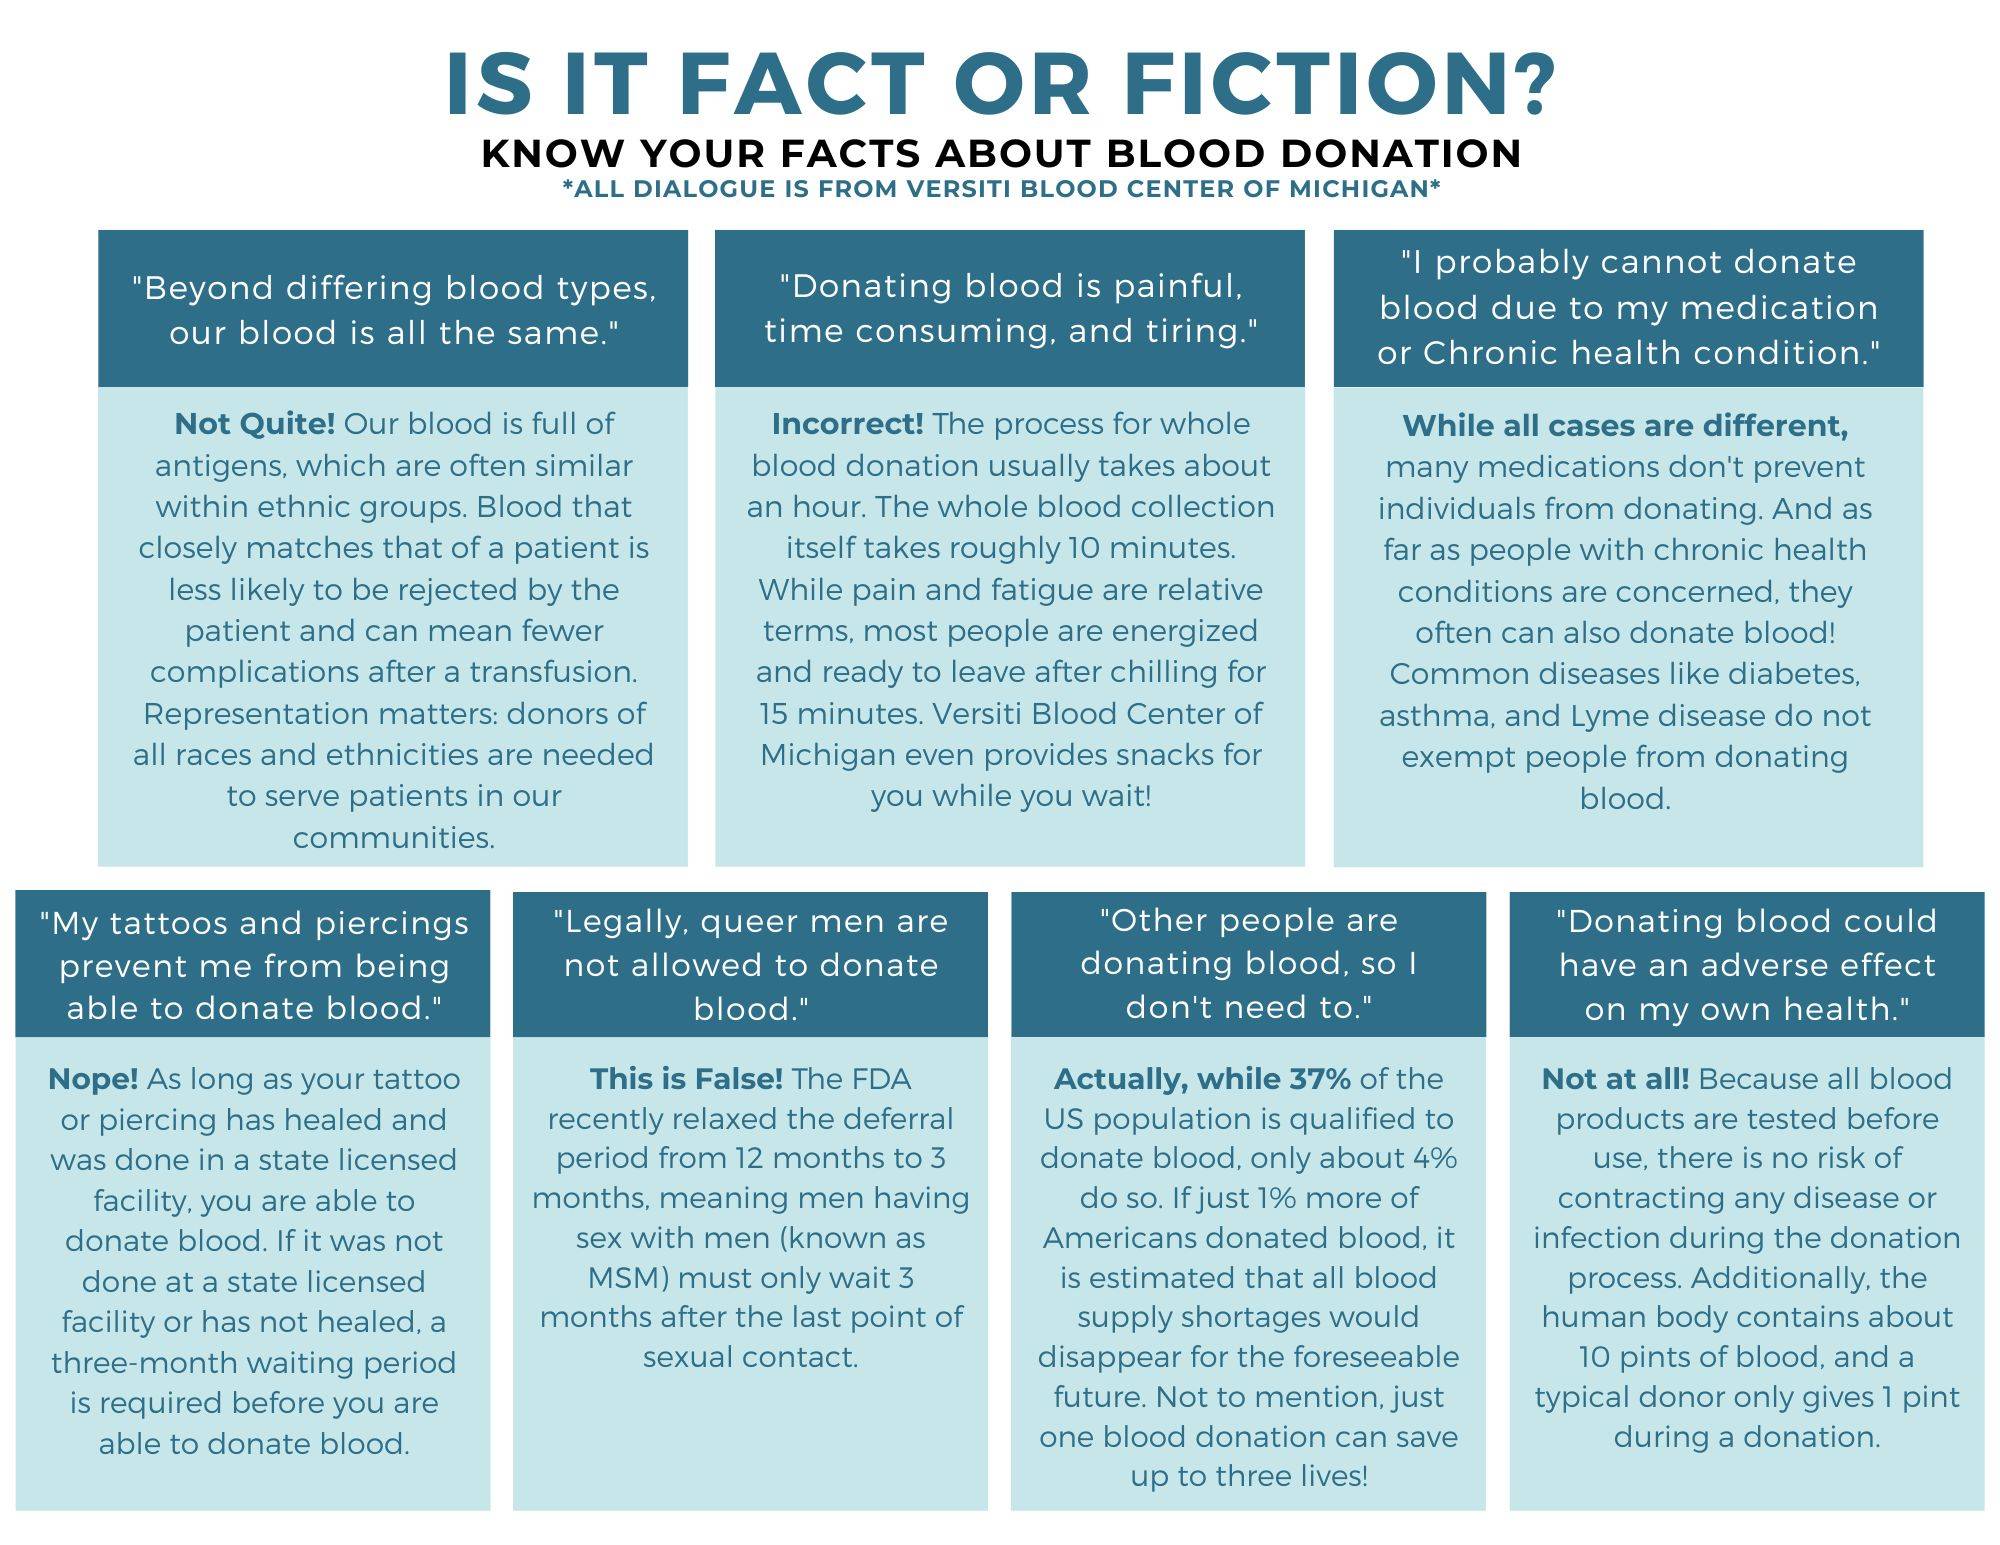 Fact vs Fiction